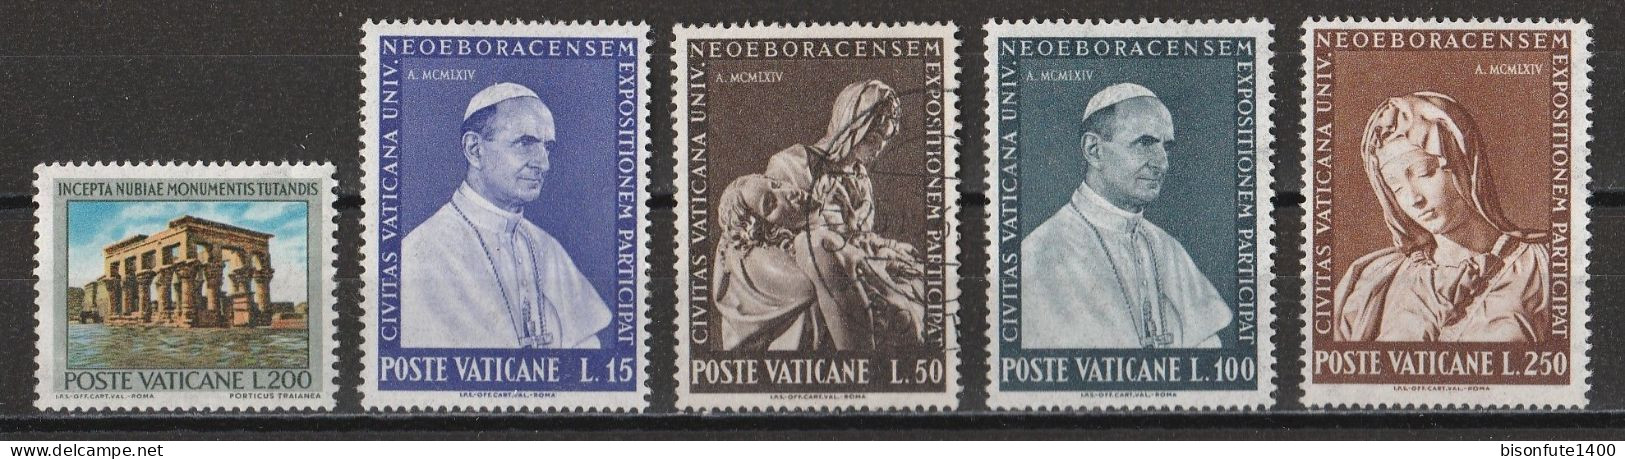 Vatican 1964 : Timbres Yvert & Tellier N° 393 - 394 - 396 - 397 - 398 - 399 - 400 - 401 - 402 - 403 Et 404 Oblitérés. - Gebraucht